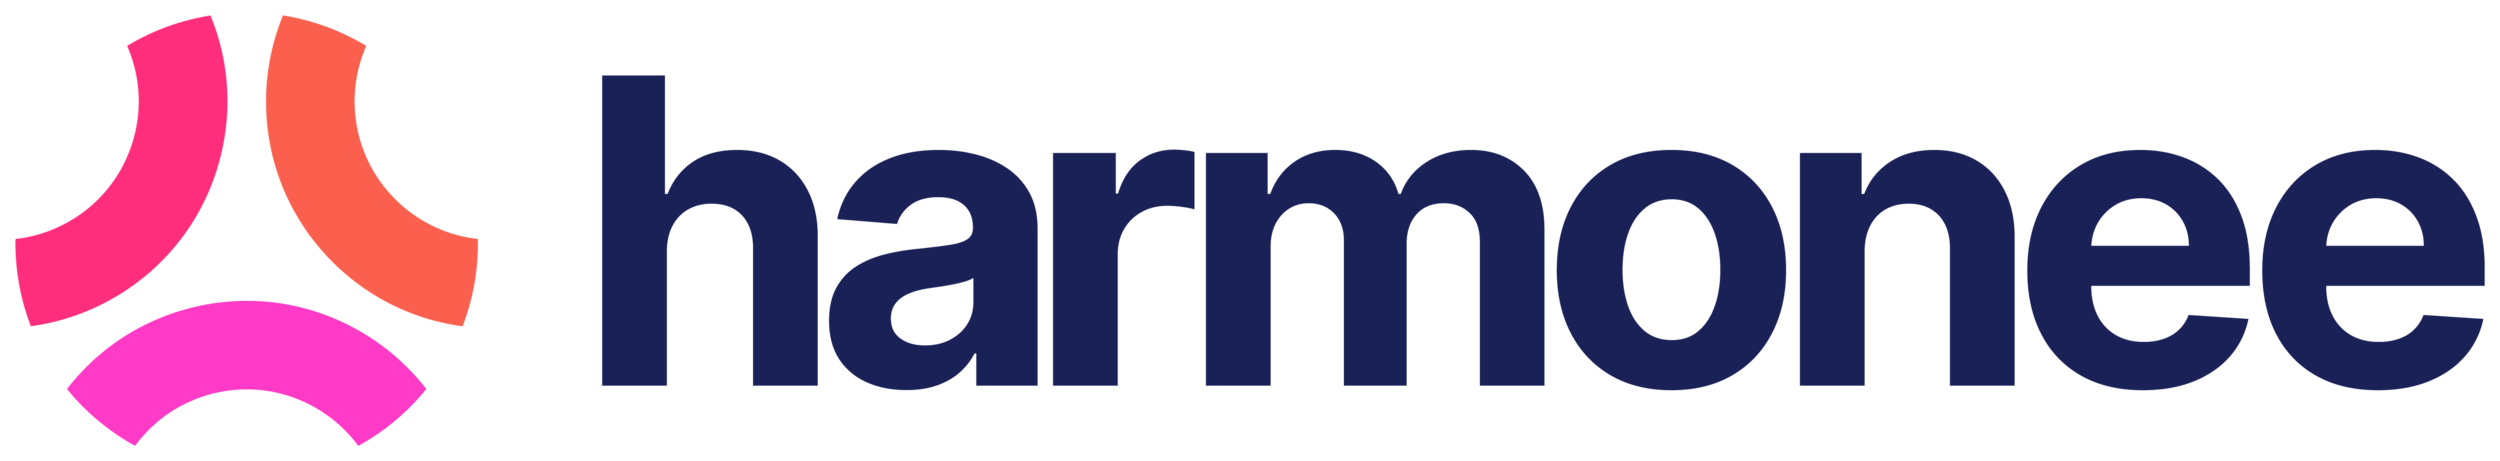 Harmonee Logo 2.png